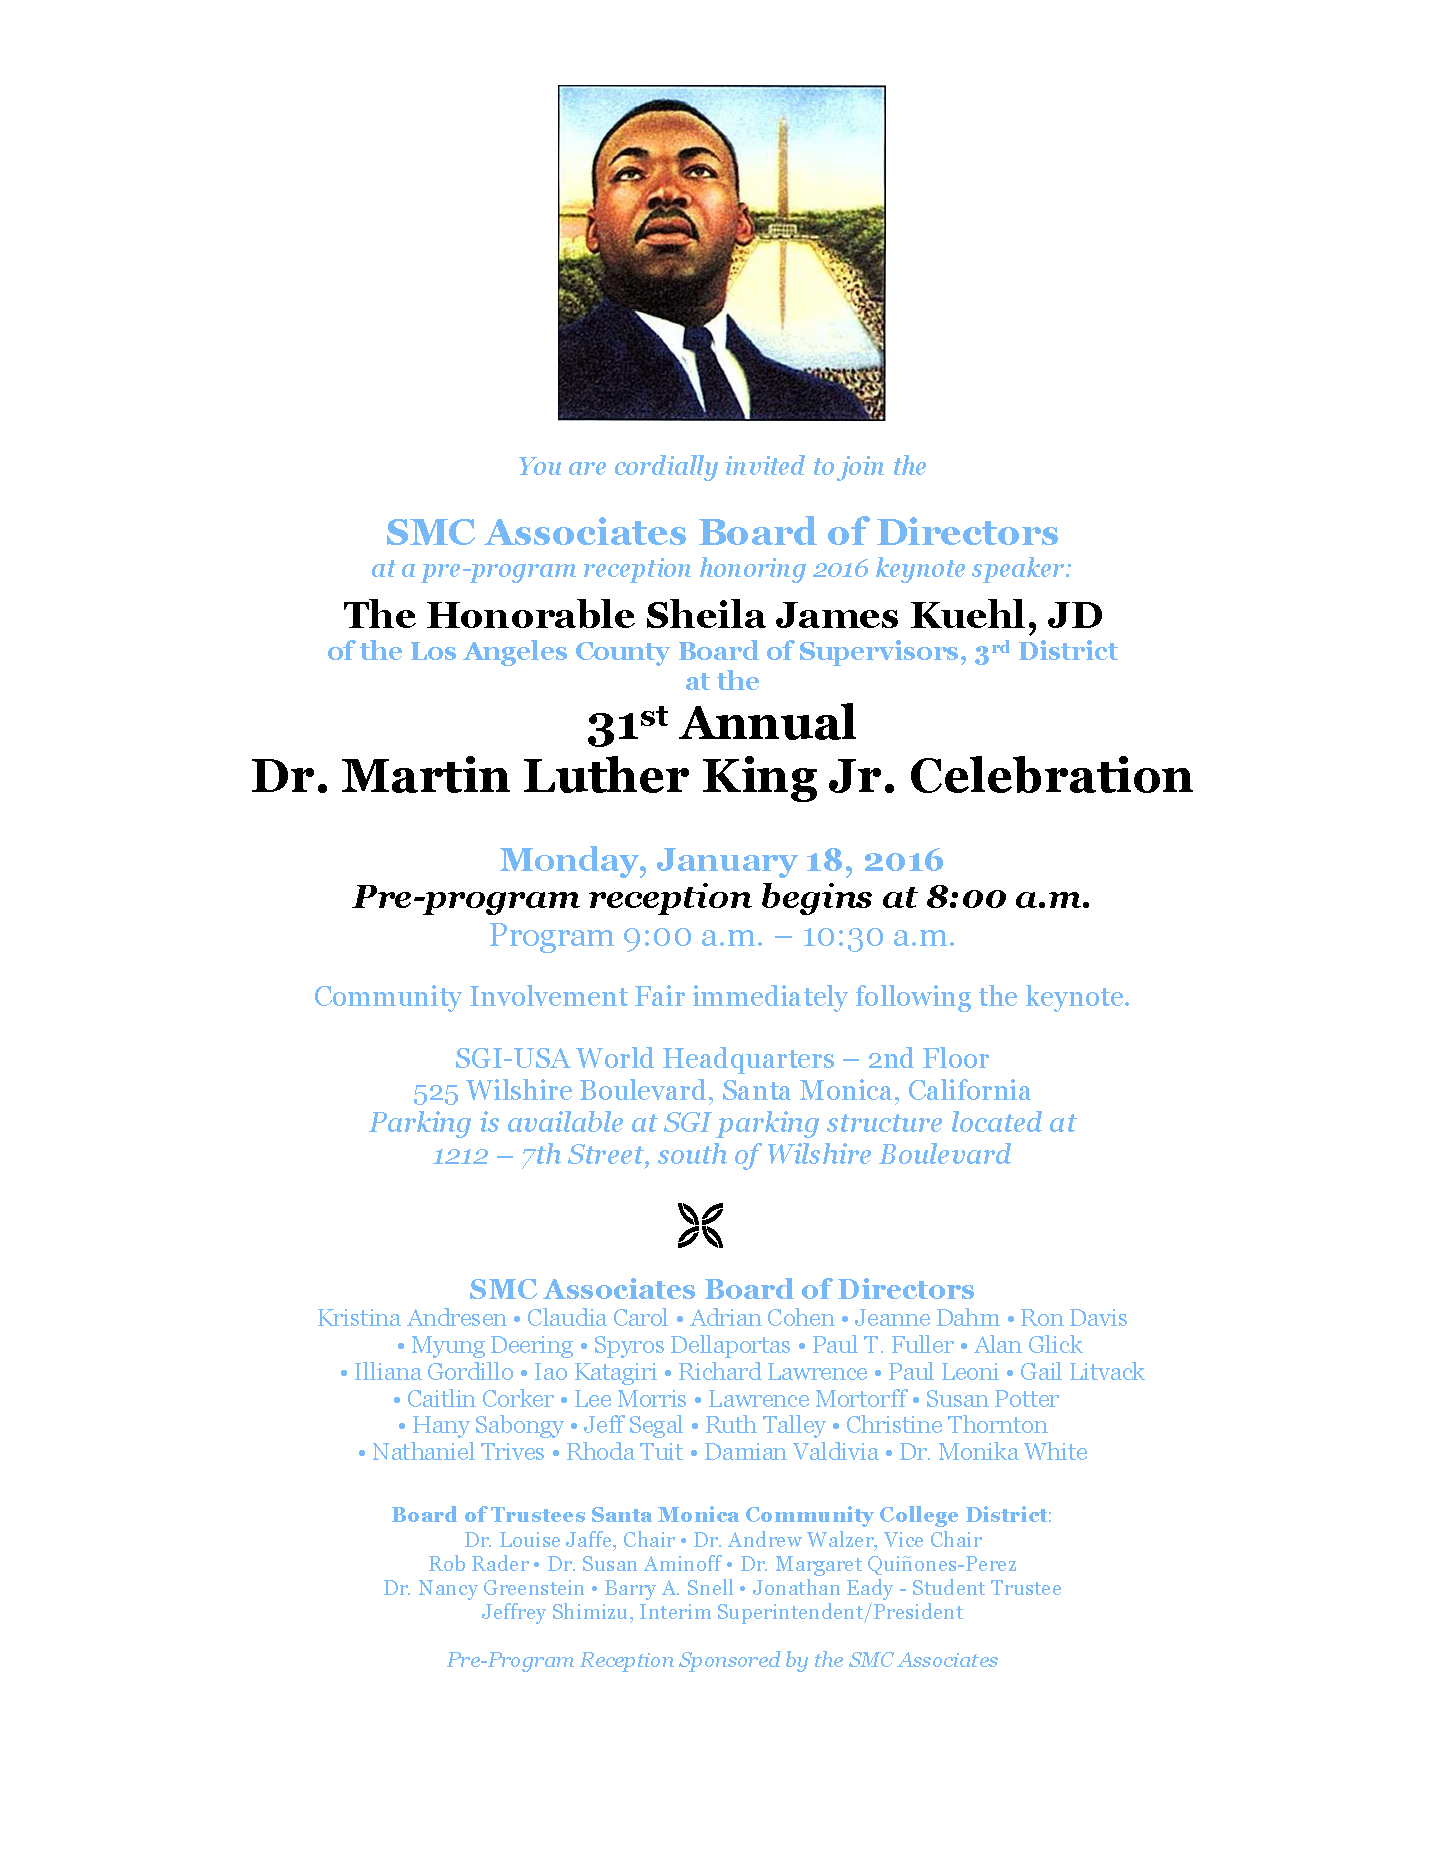 31st Annual Martin Luther King Jr Celebration - Monday January 18 at 8 am at SGI-USA World Headquarters, 2nd Floor, 525 Wilshire Blvd, Santa Monica, CA